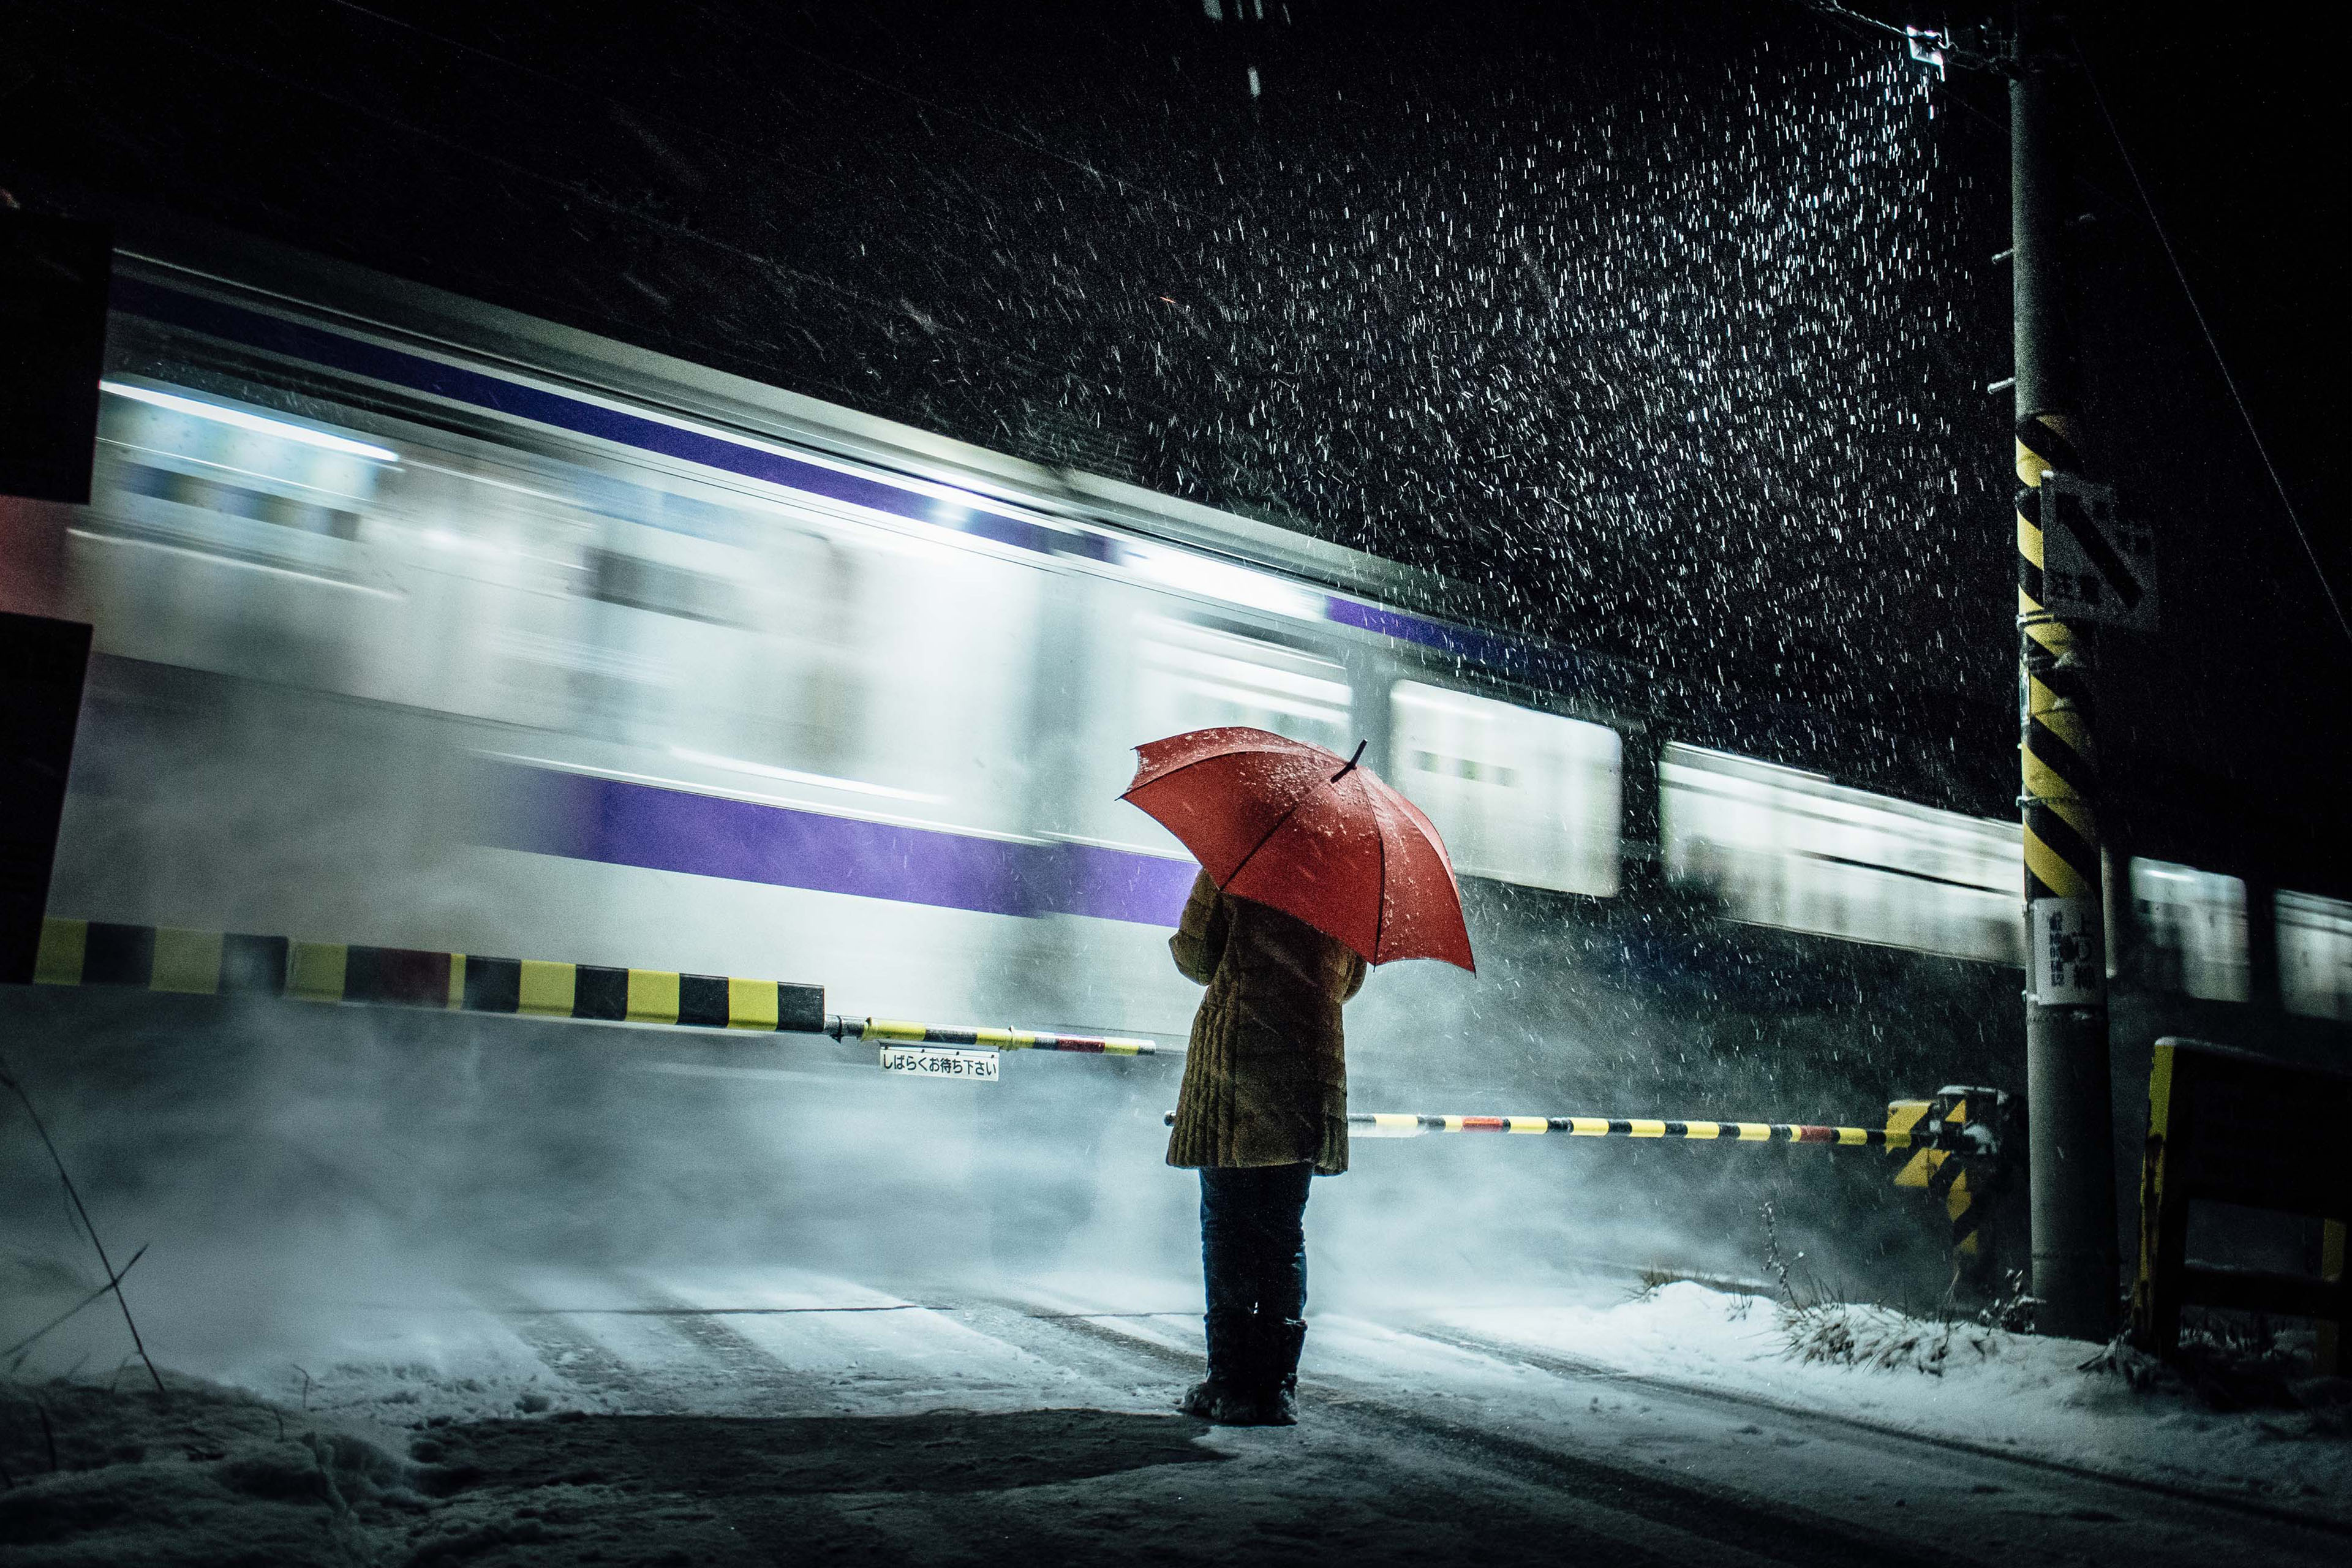 ey-snow-train-level-crossing